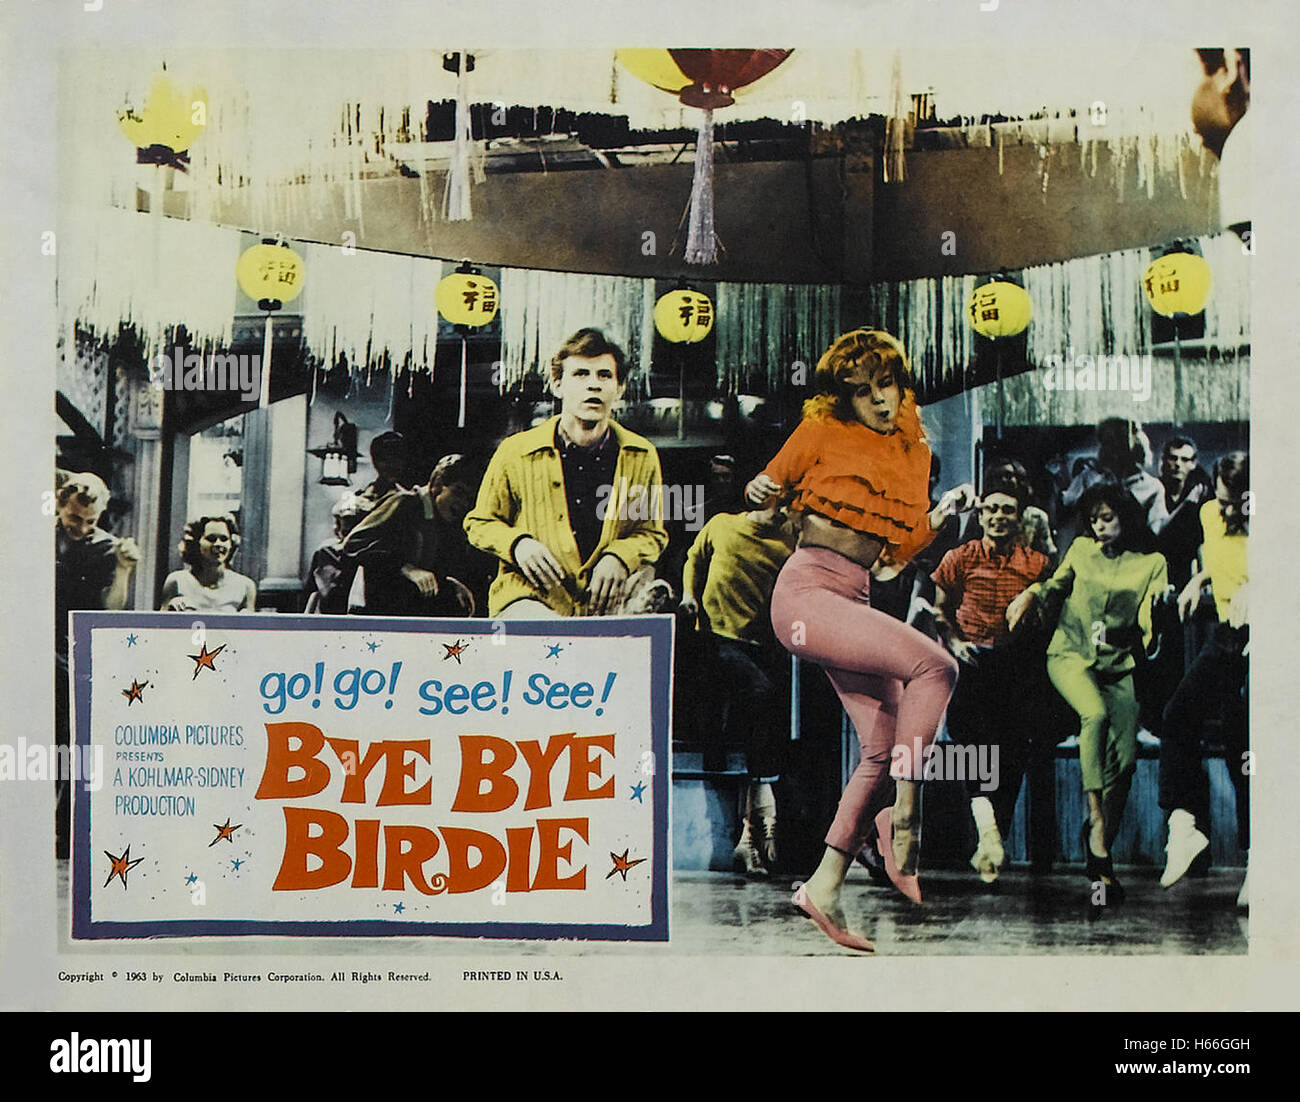 Bye Bye Birdie - Movie Poster - Foto Stock